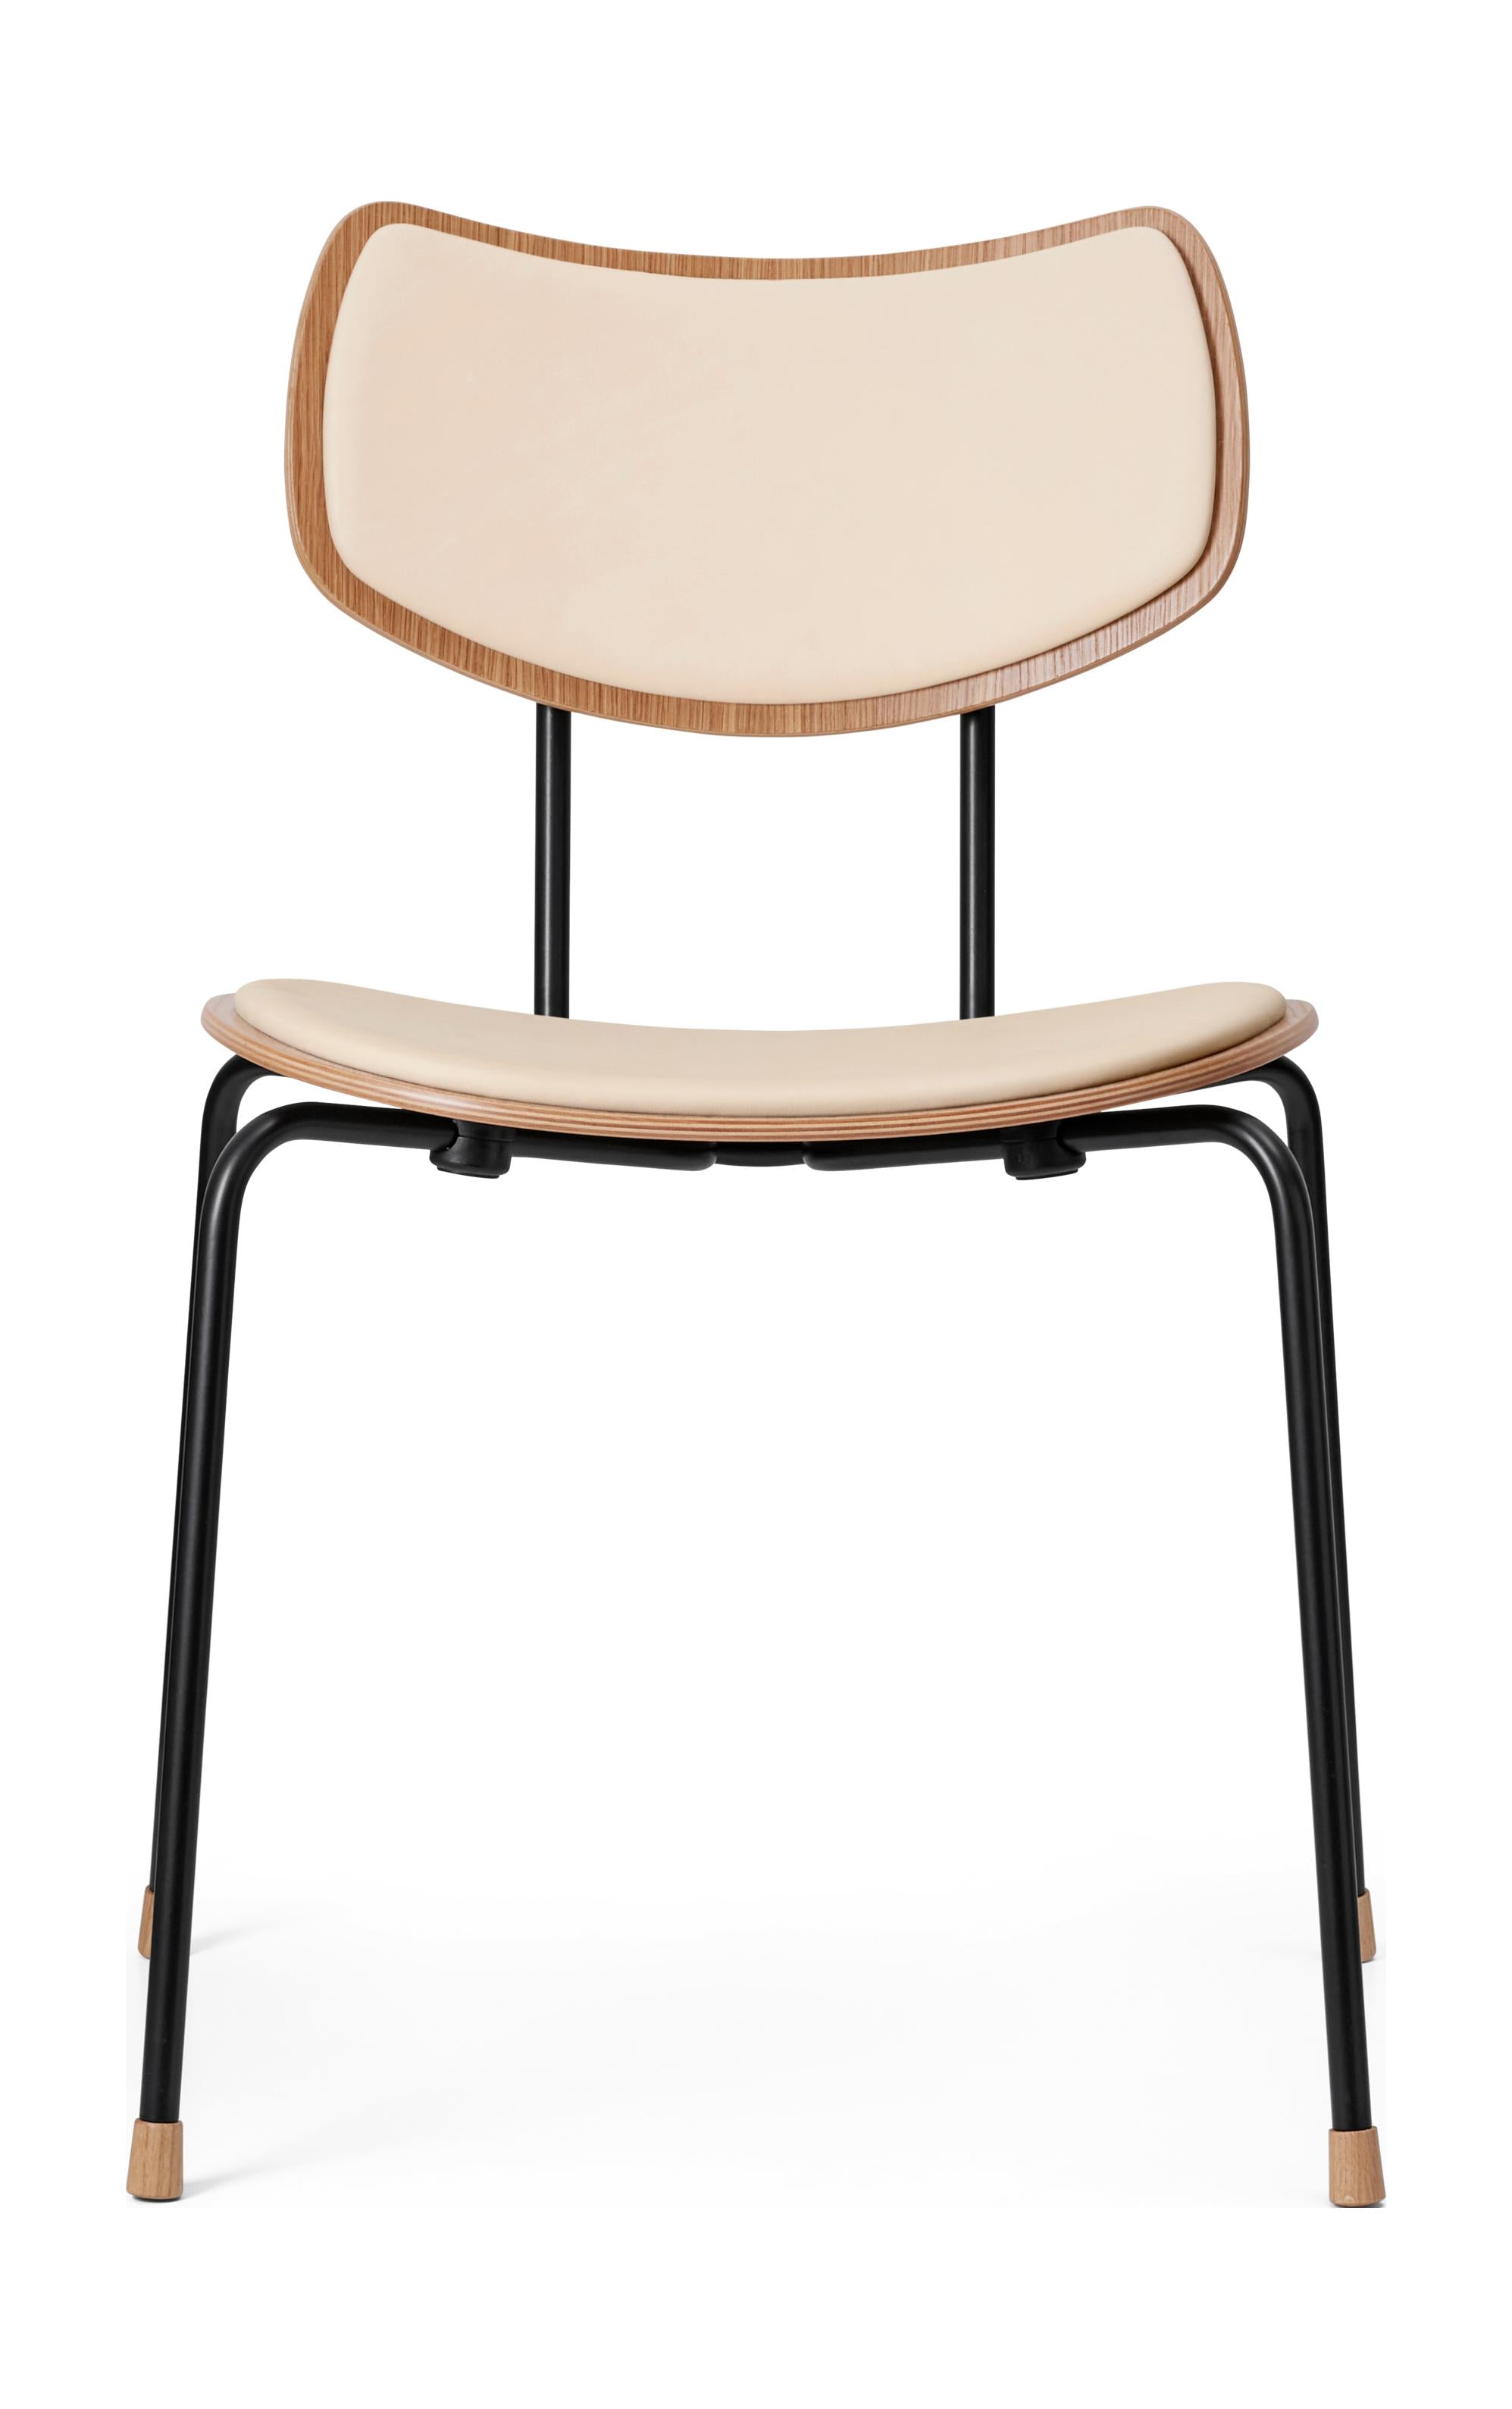 Carl Hansen Vla26p Vega -stol, ekrökolja/läder SIF 90